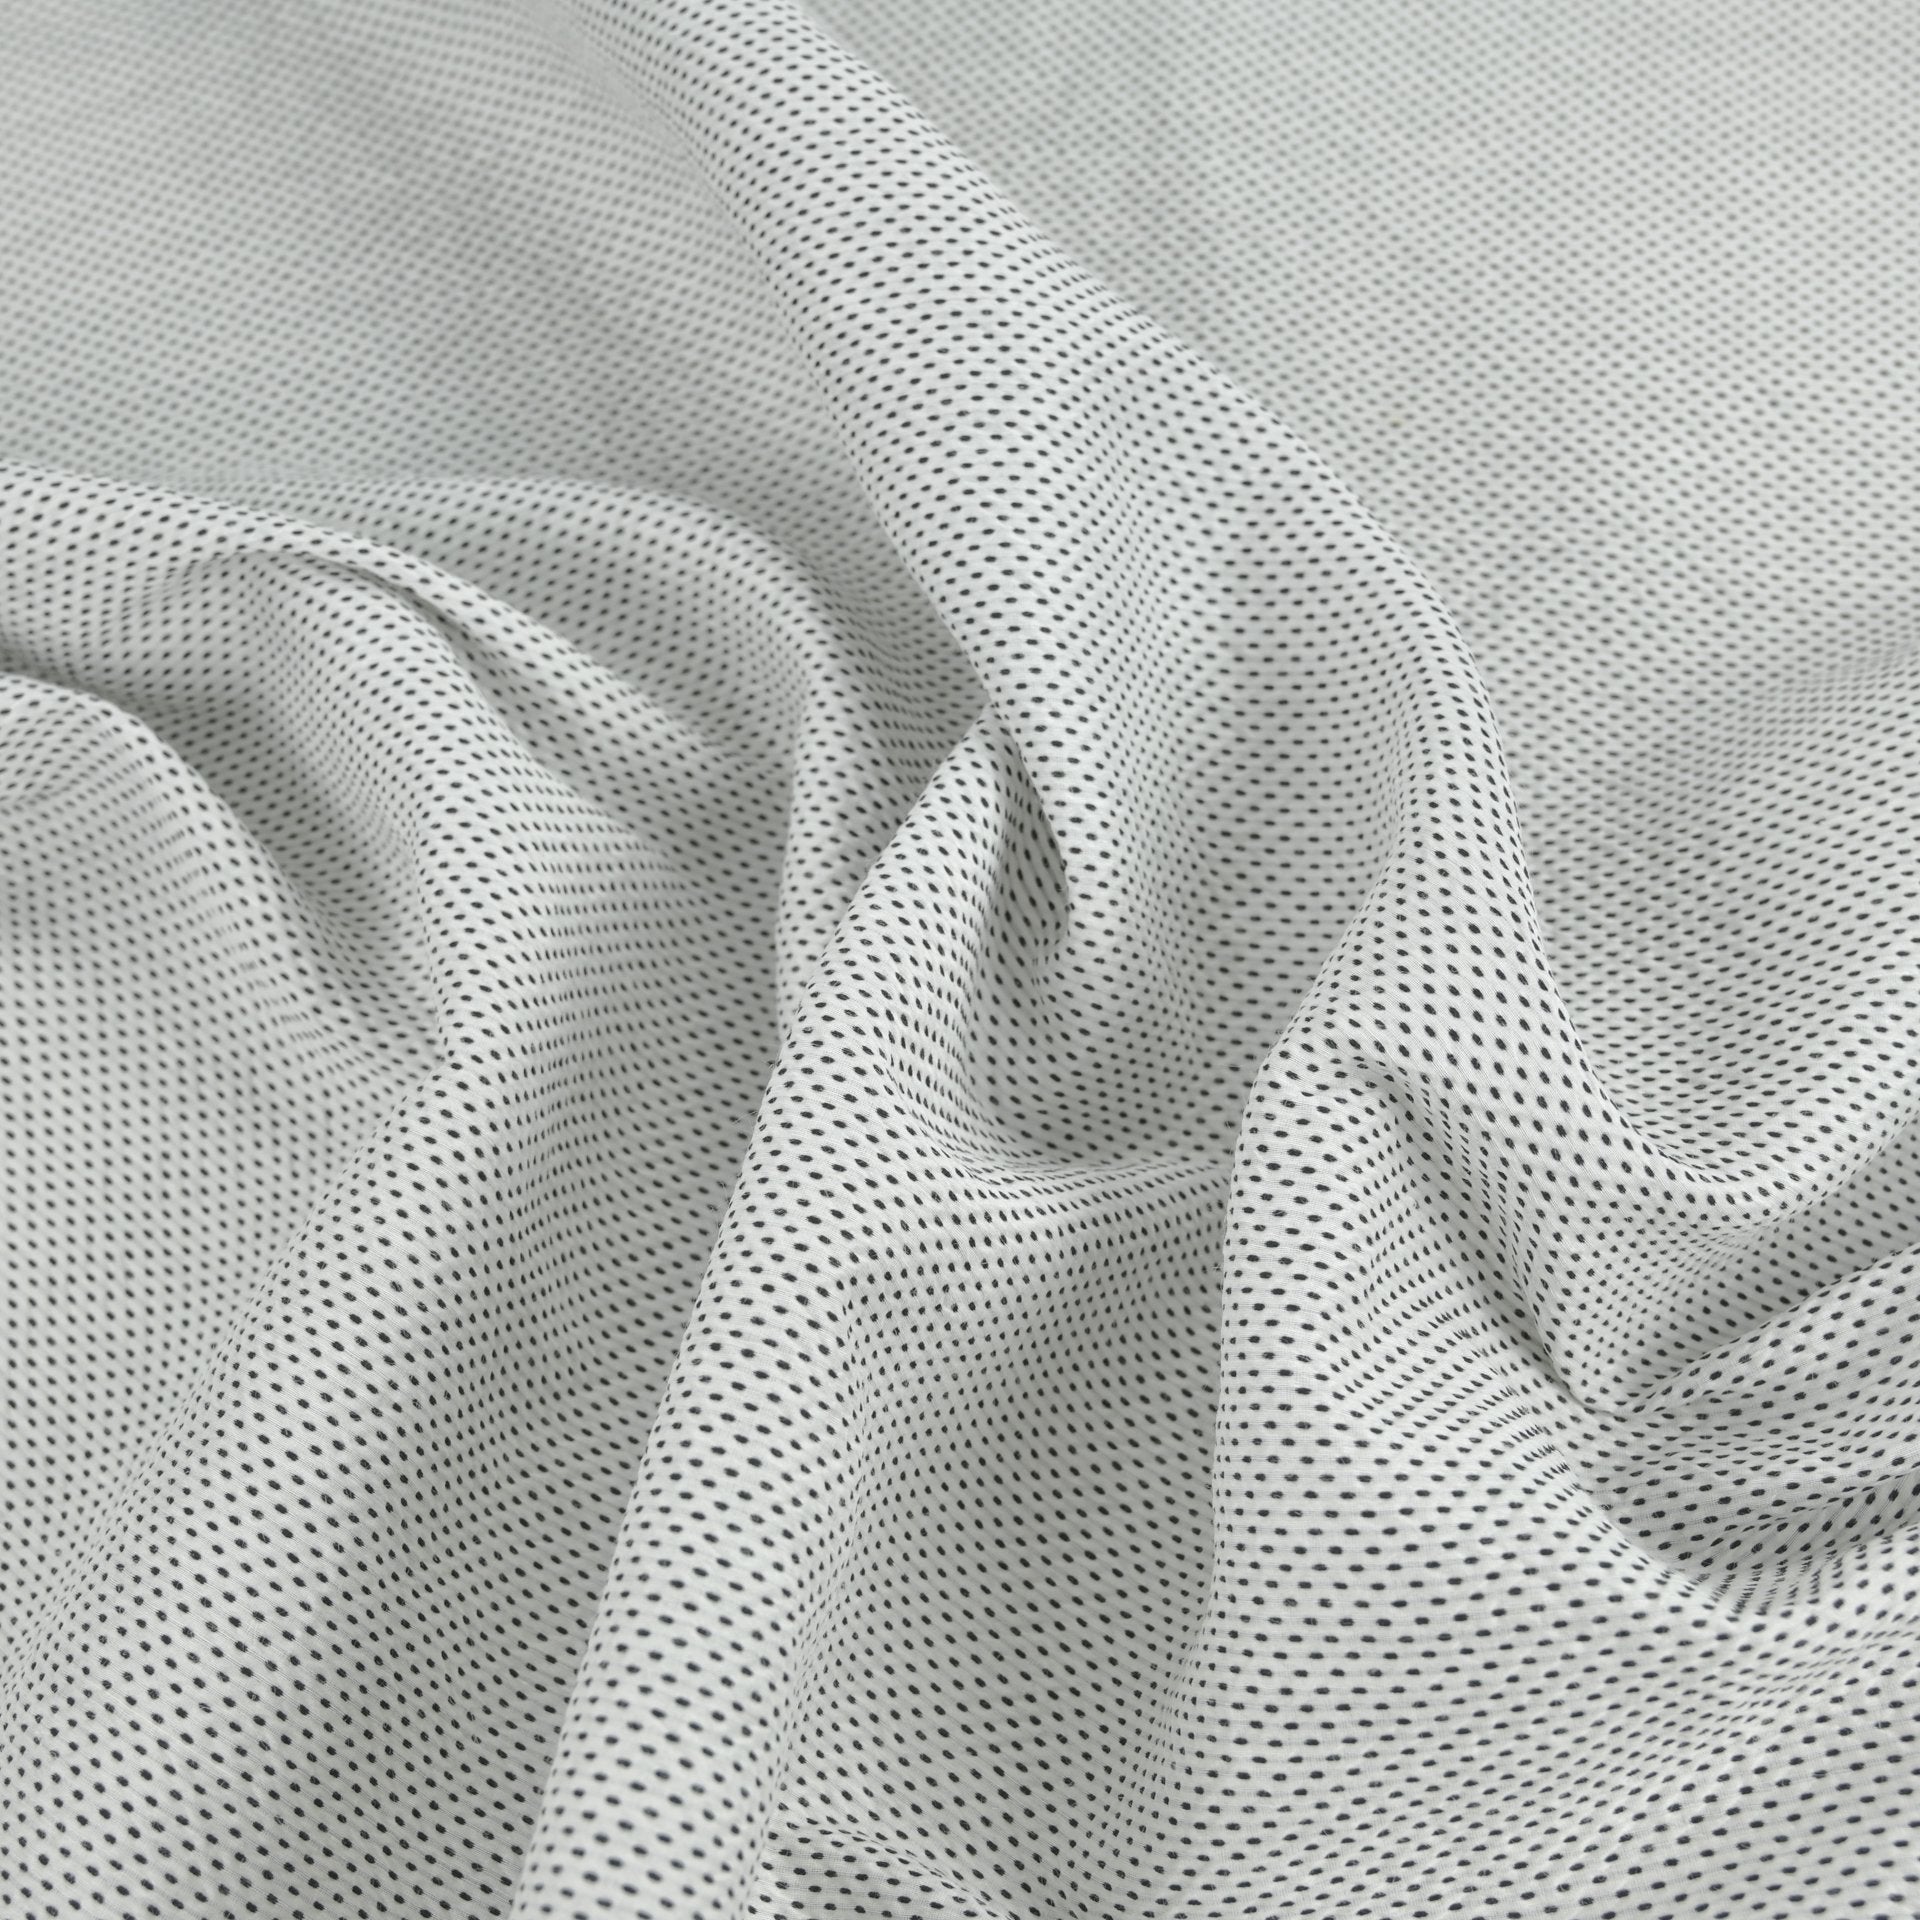 Black &amp; White Polkadot Silk Fabric 97600